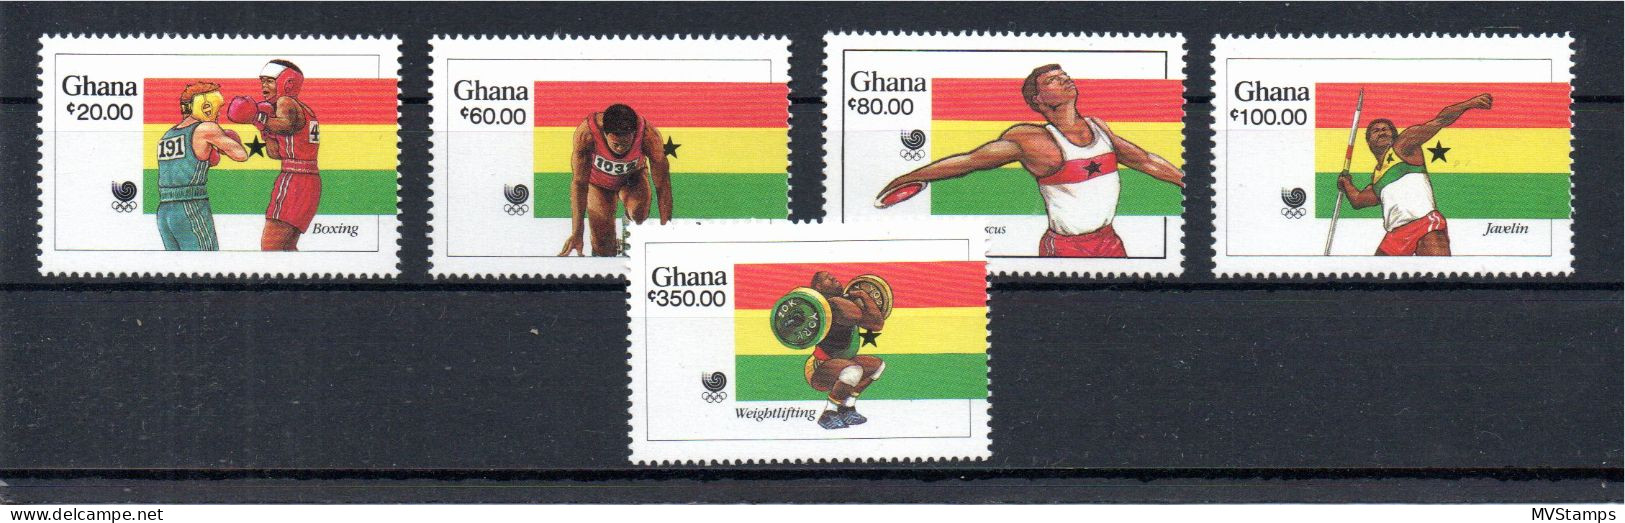 Ghana 1988 Set Olympic/Sports Stamps (Michel 1205/09) MNH - Ghana (1957-...)